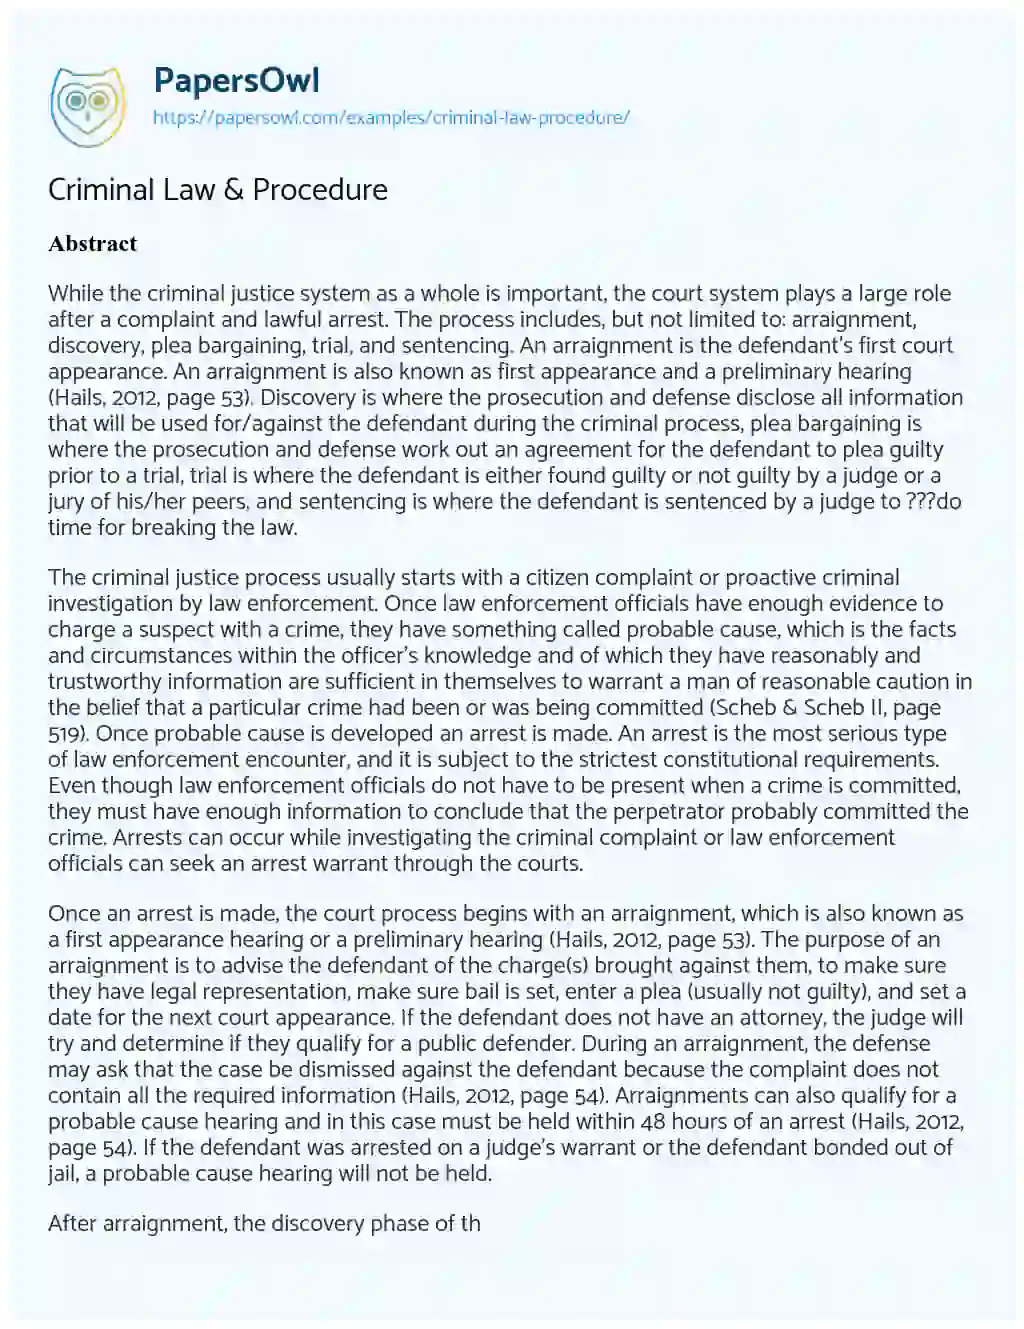 Essay on Criminal Law & Procedure